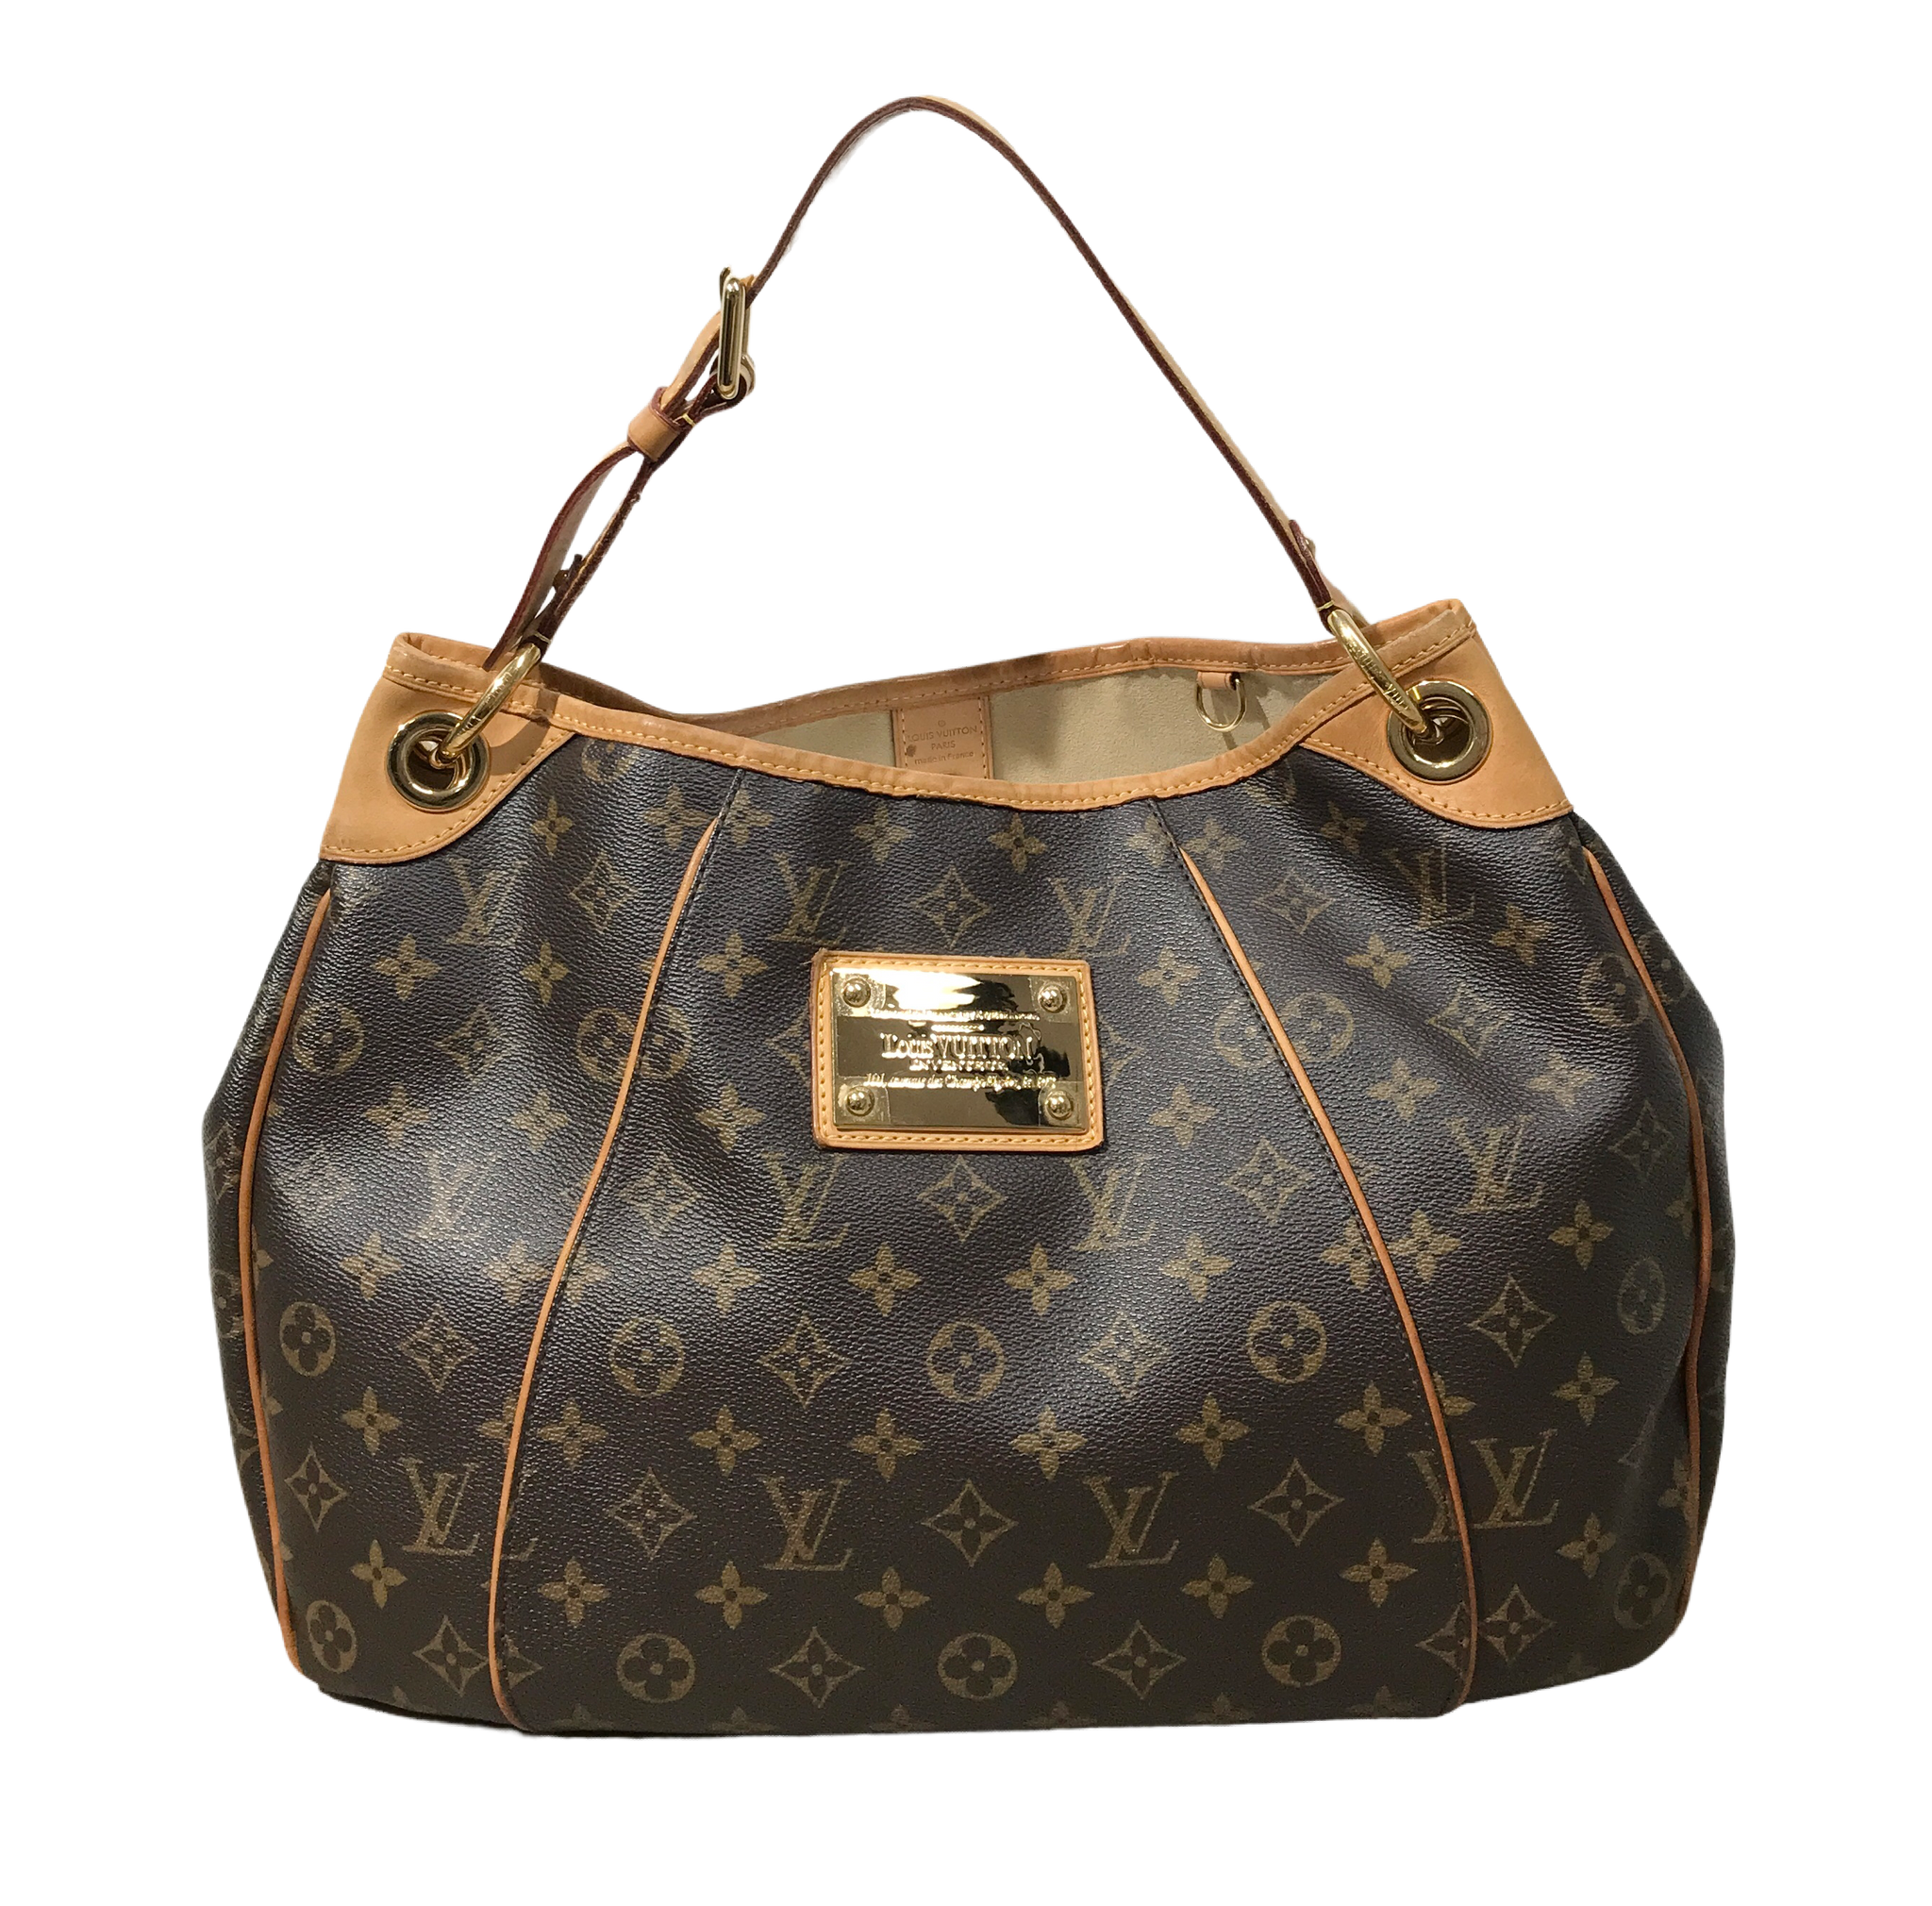 Louis Vuitton Galliera Monogram Shoulder Bag Nice Style 